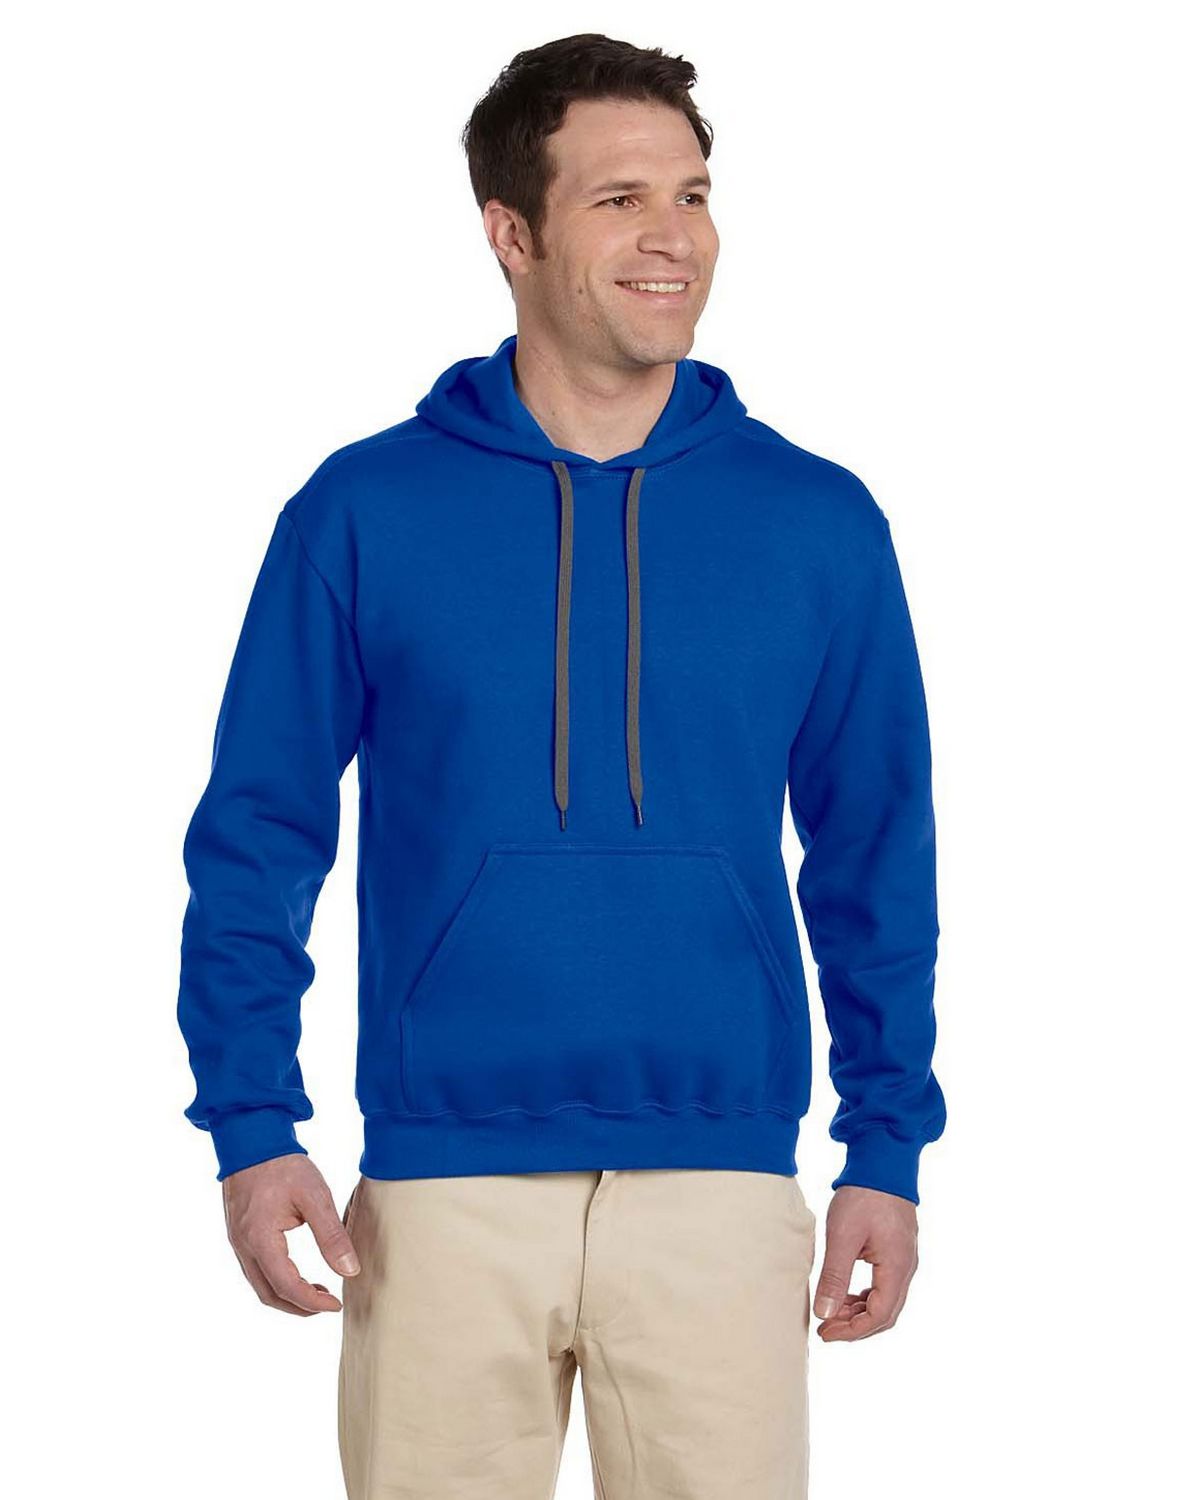 Gildan 92500 Adult Premium Cotton Hooded Sweatshirt - ApparelnBags.com